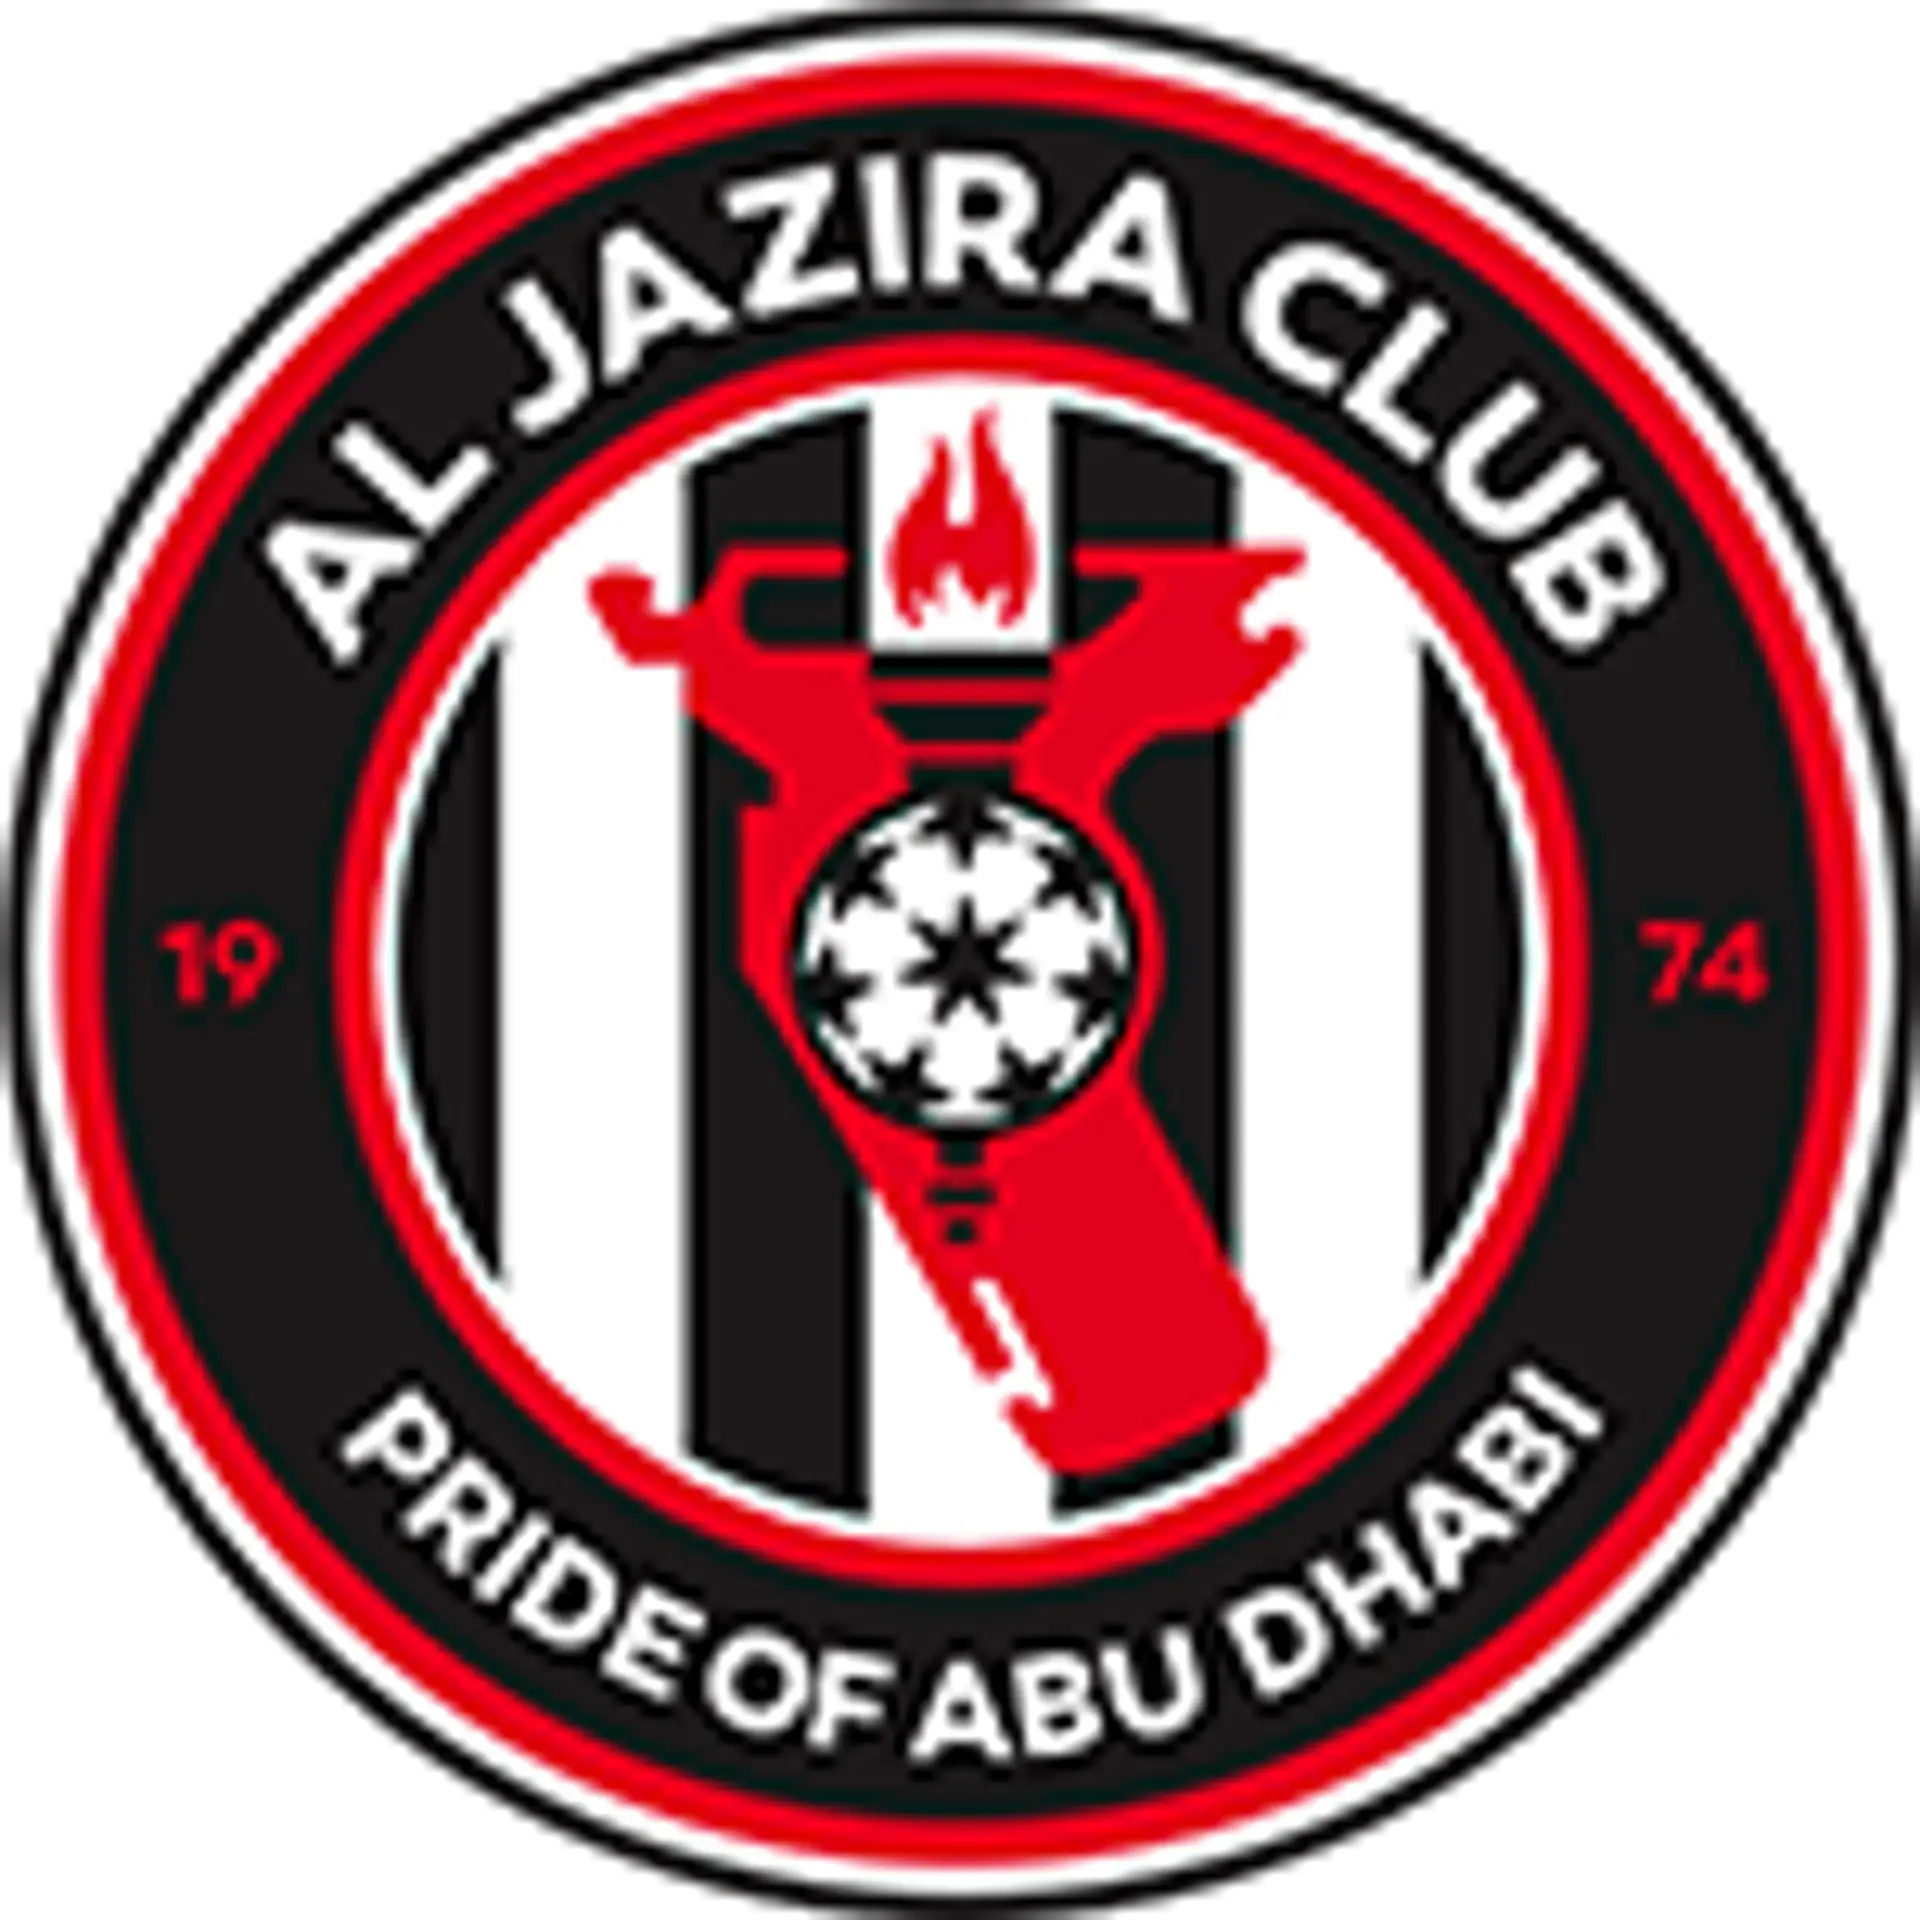 AL Jazira Abu Dhabi